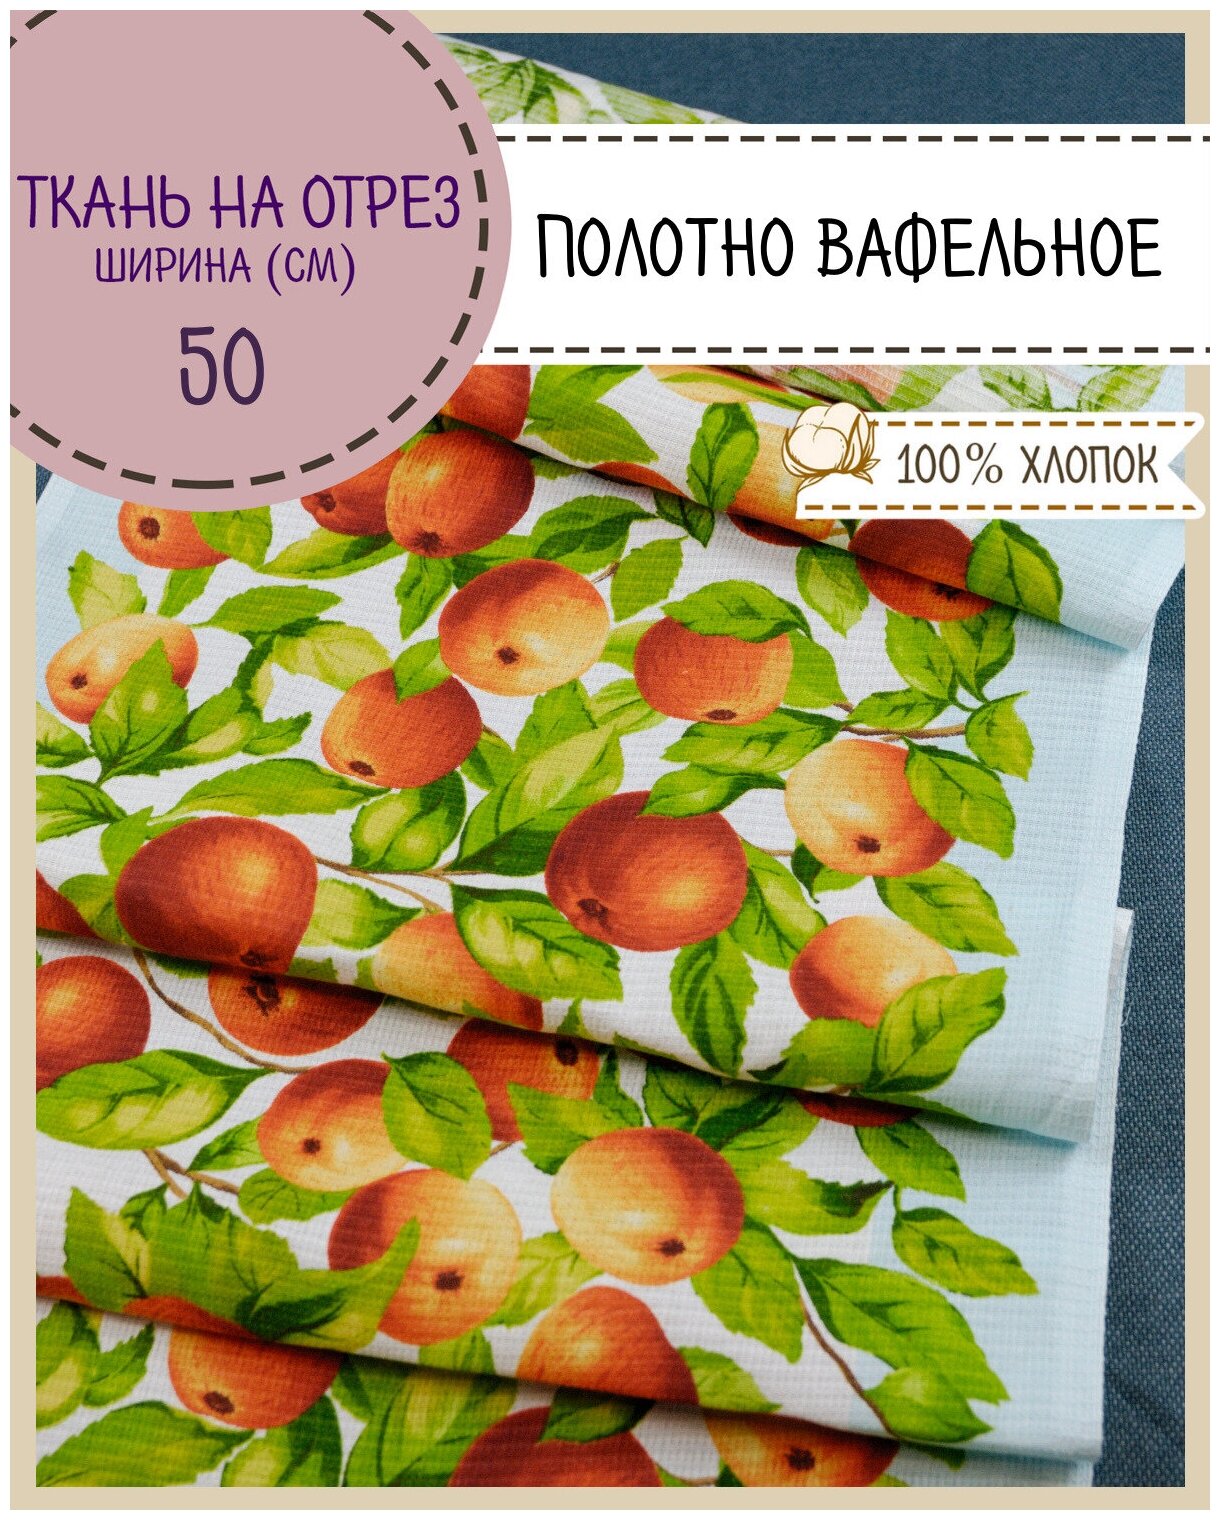 Ткань Полотно вафельное "Яблочки", 100% хлопок, ш-50 см, на отрез, цена за 2,2 пог. метра